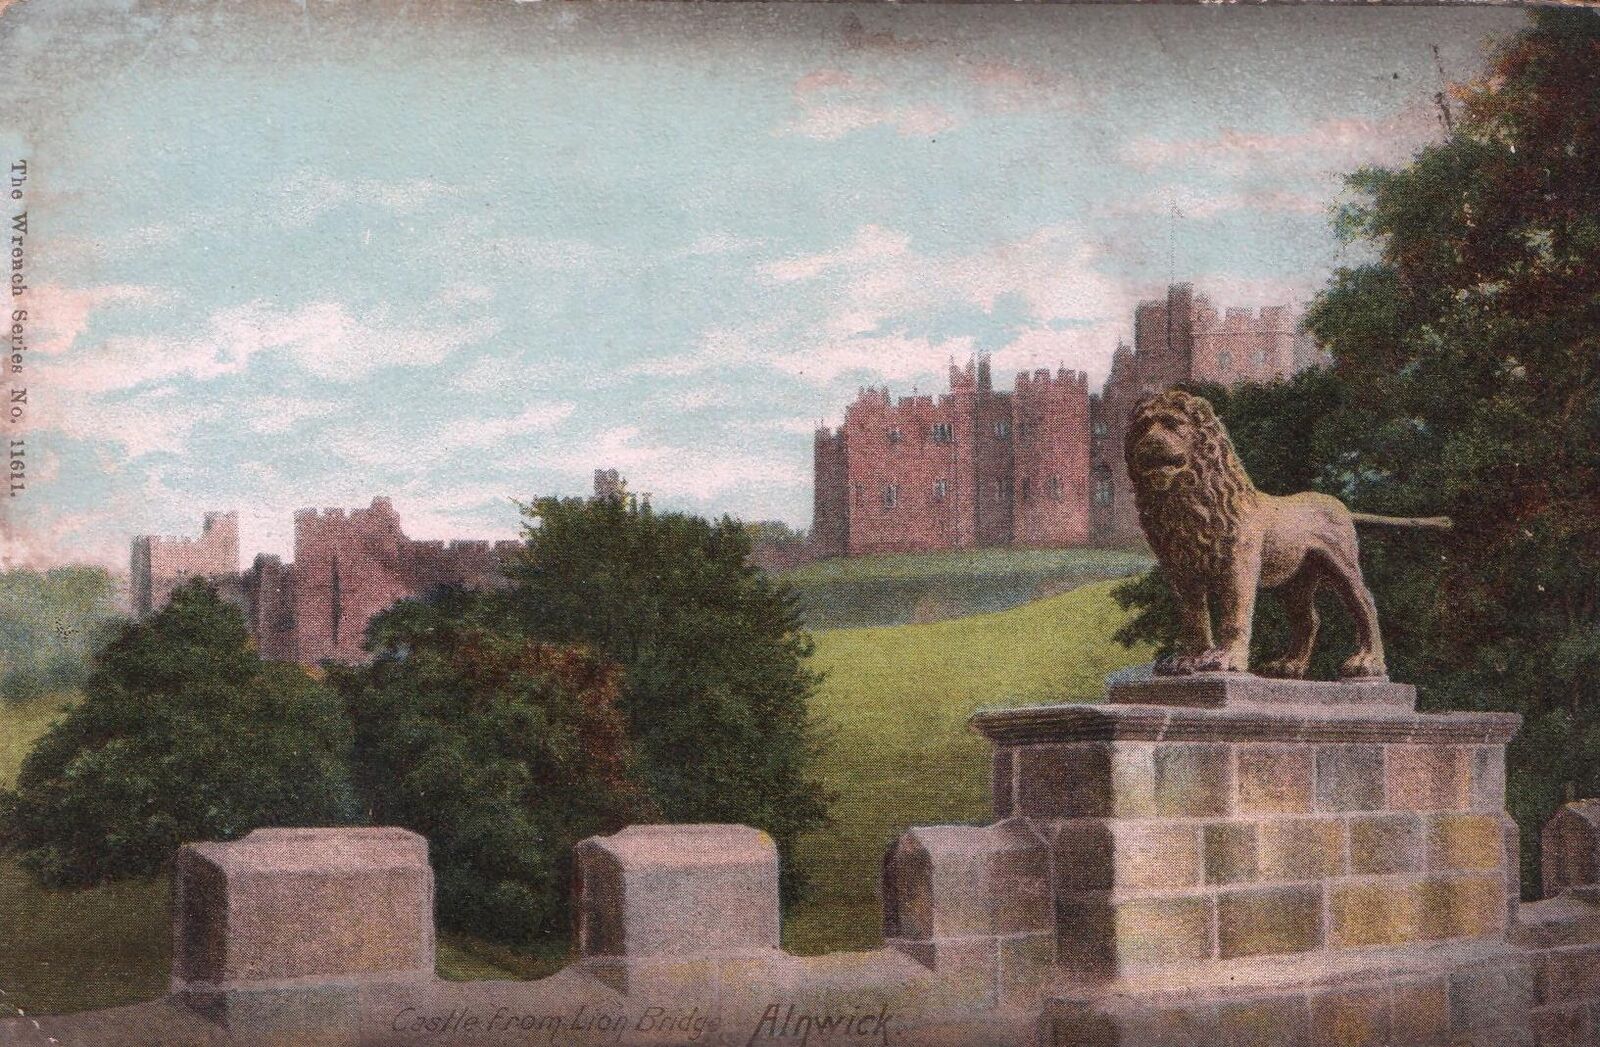 1932 Vintage Harry Potter Percy Lion at Alnwick Castle POSTCARD - UNUSED